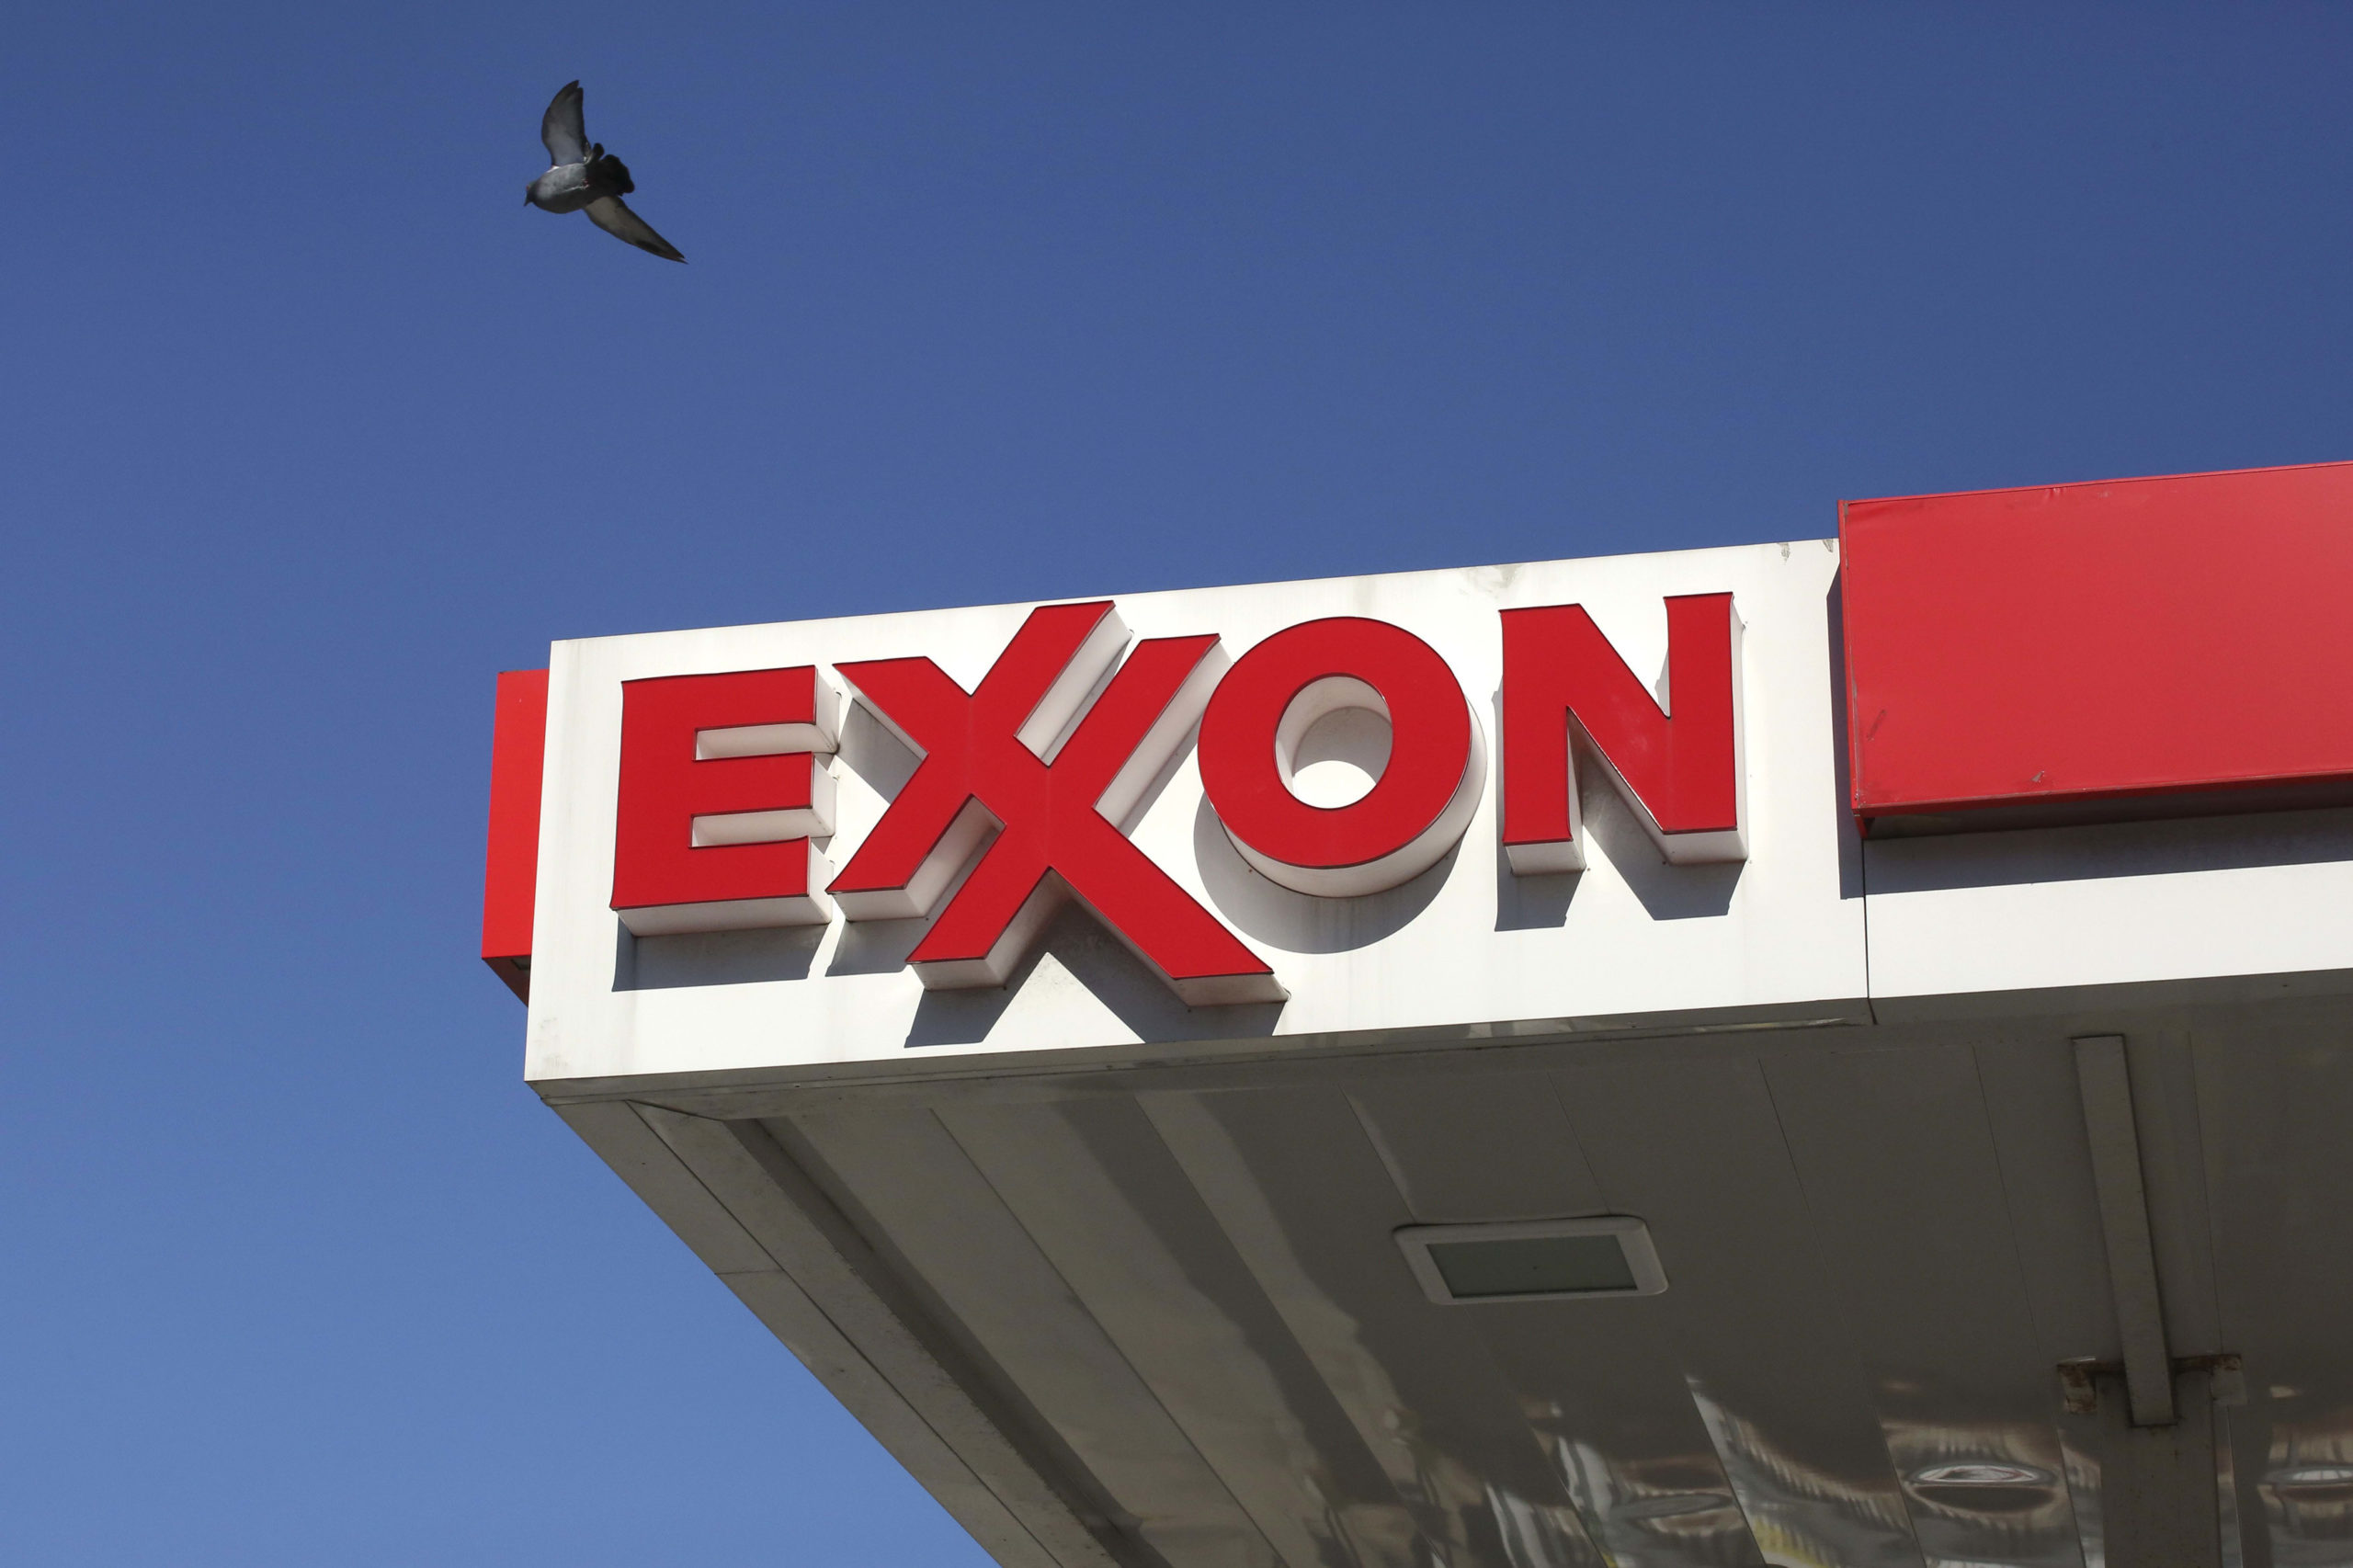 Some millennial buyers like ExxonMobil